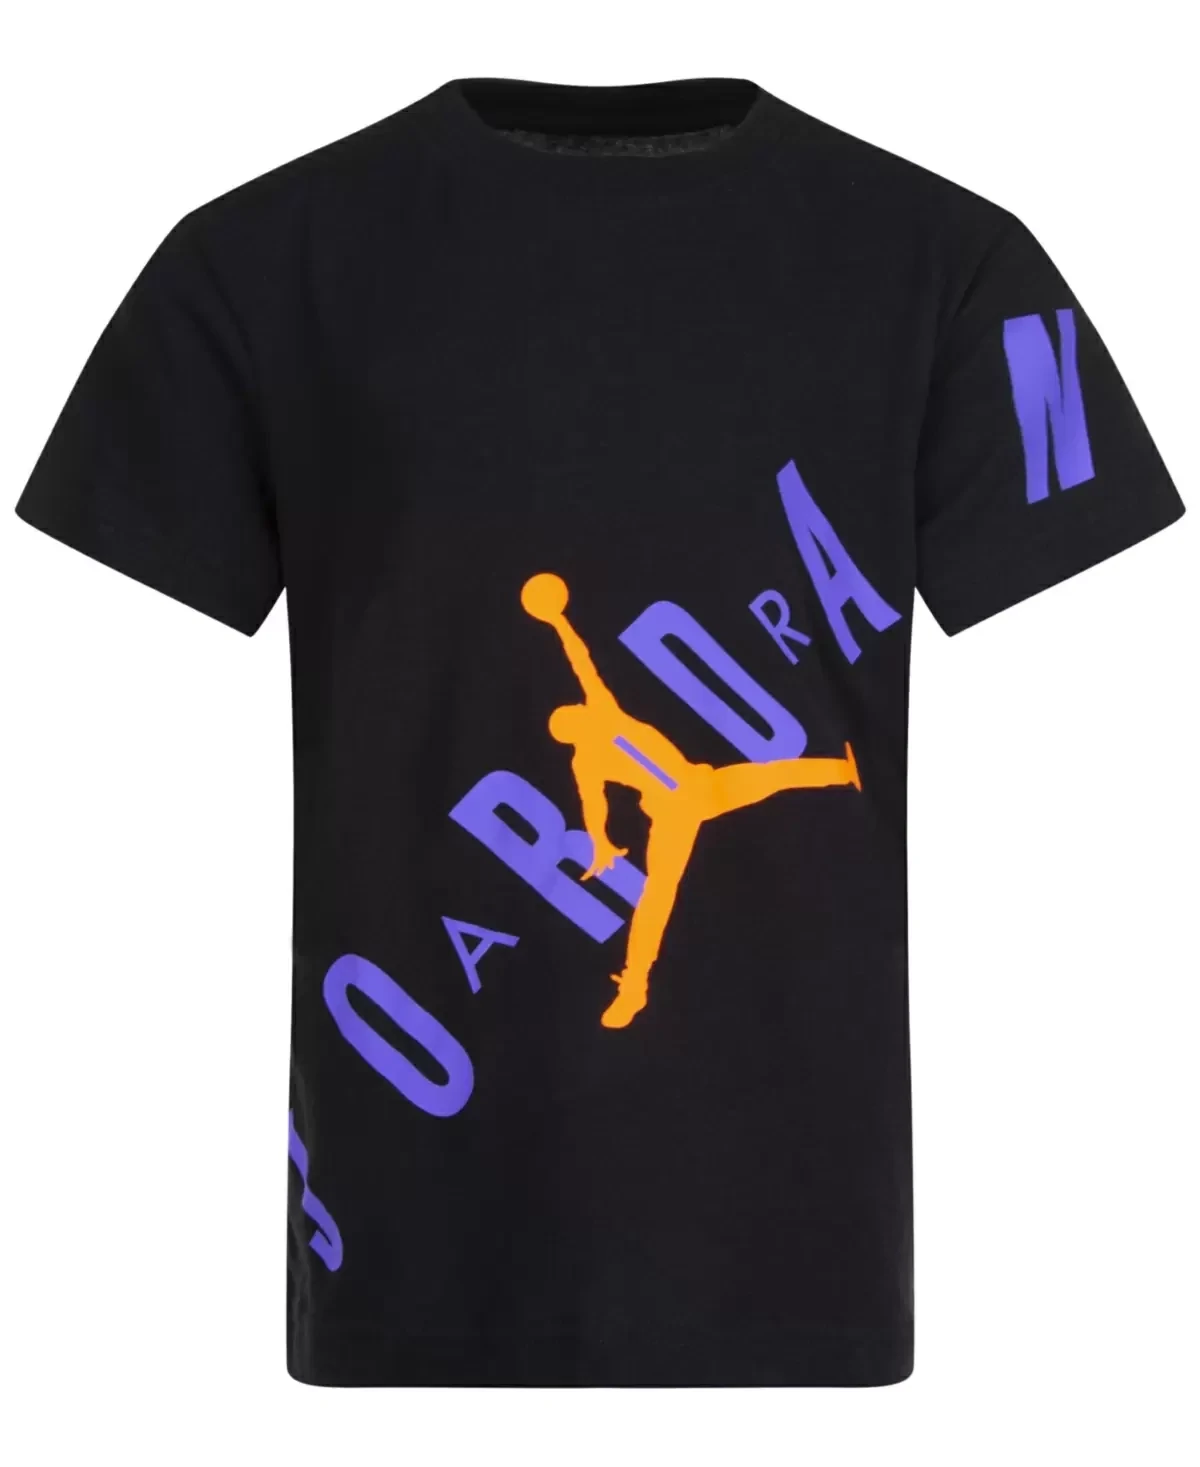 Jordan Little Boys Jumpman Stretch Out T-shirt - Black, Total Orange - Size 5